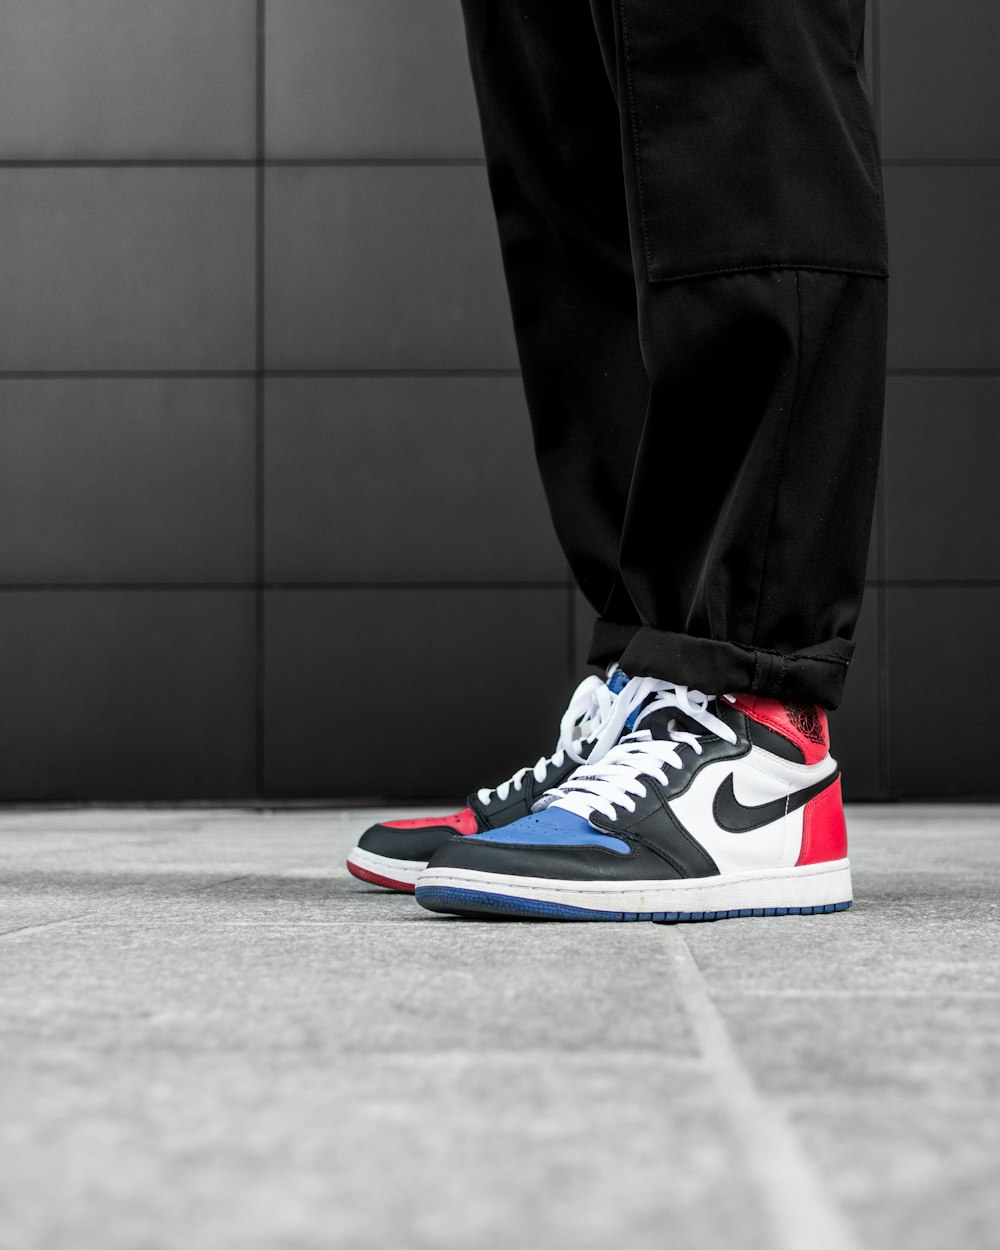 man wears blue-red-and-black Nike Air Jordan 1 shoes photo – Free Footwear  Image on Unsplash